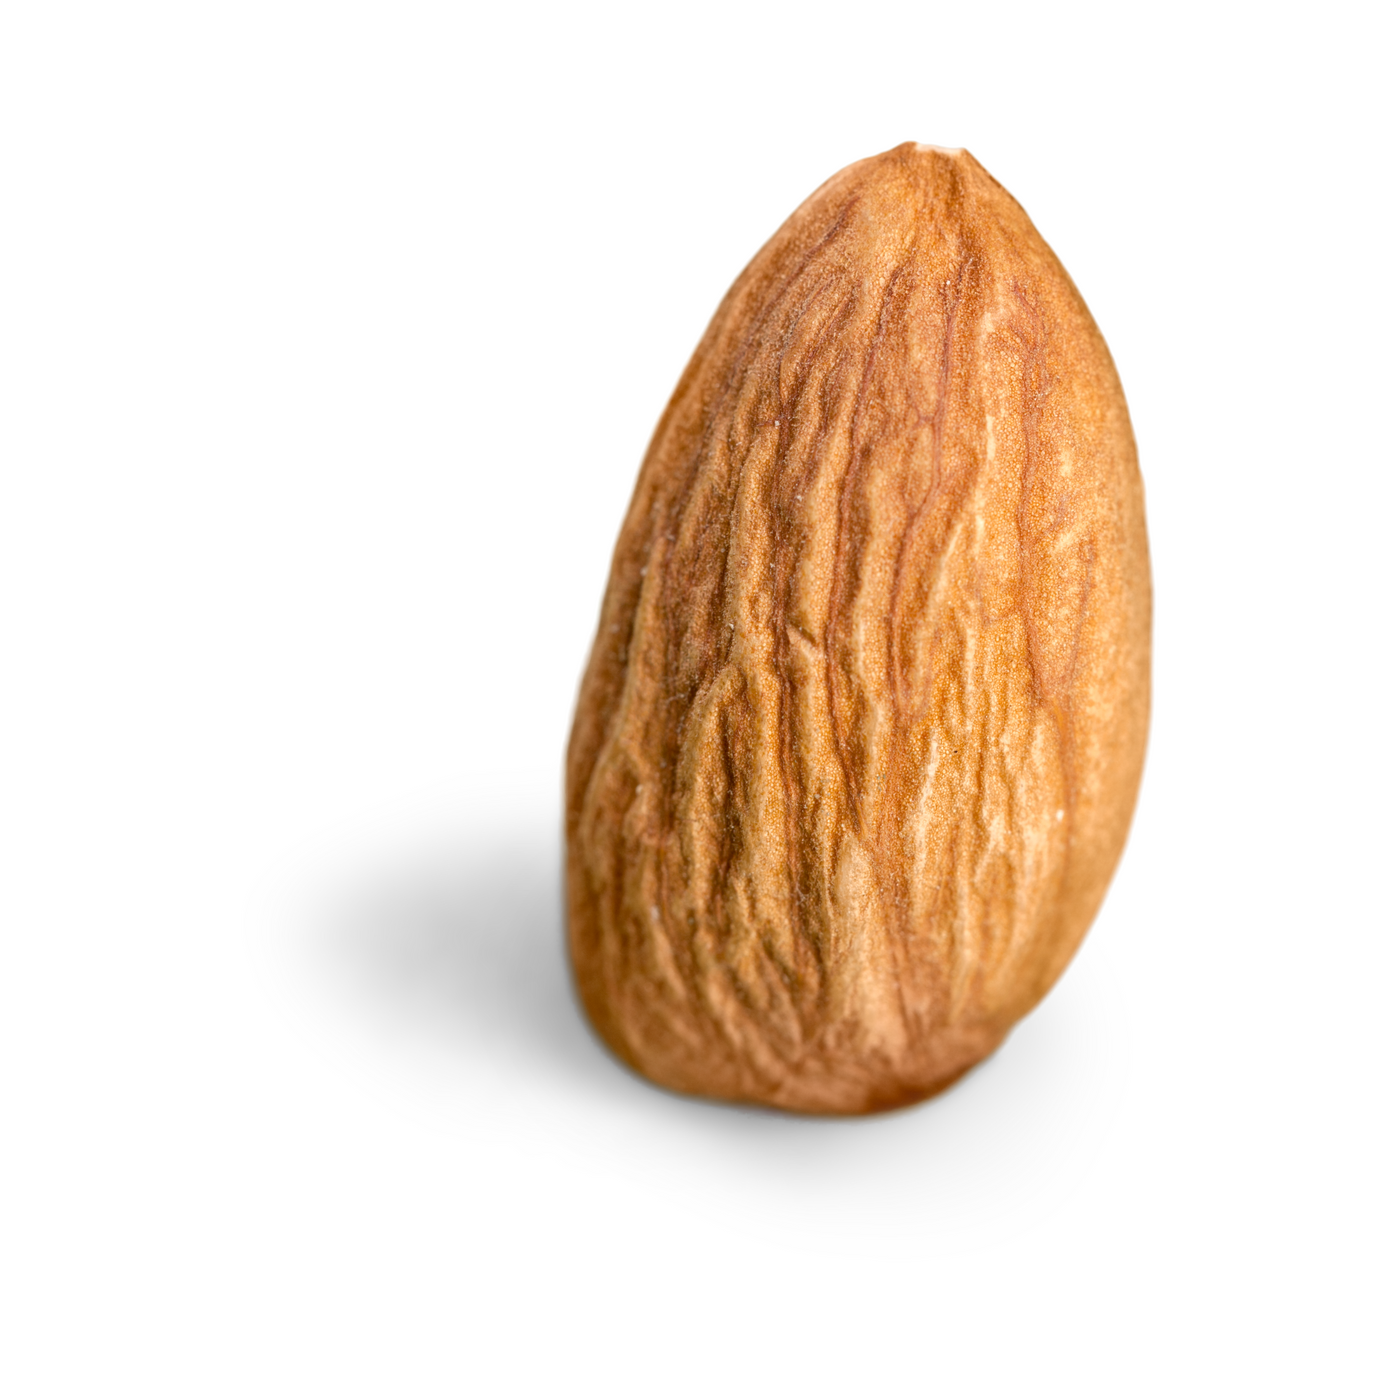 Natural Almonds, Large Size 1 kg/2.2 lb